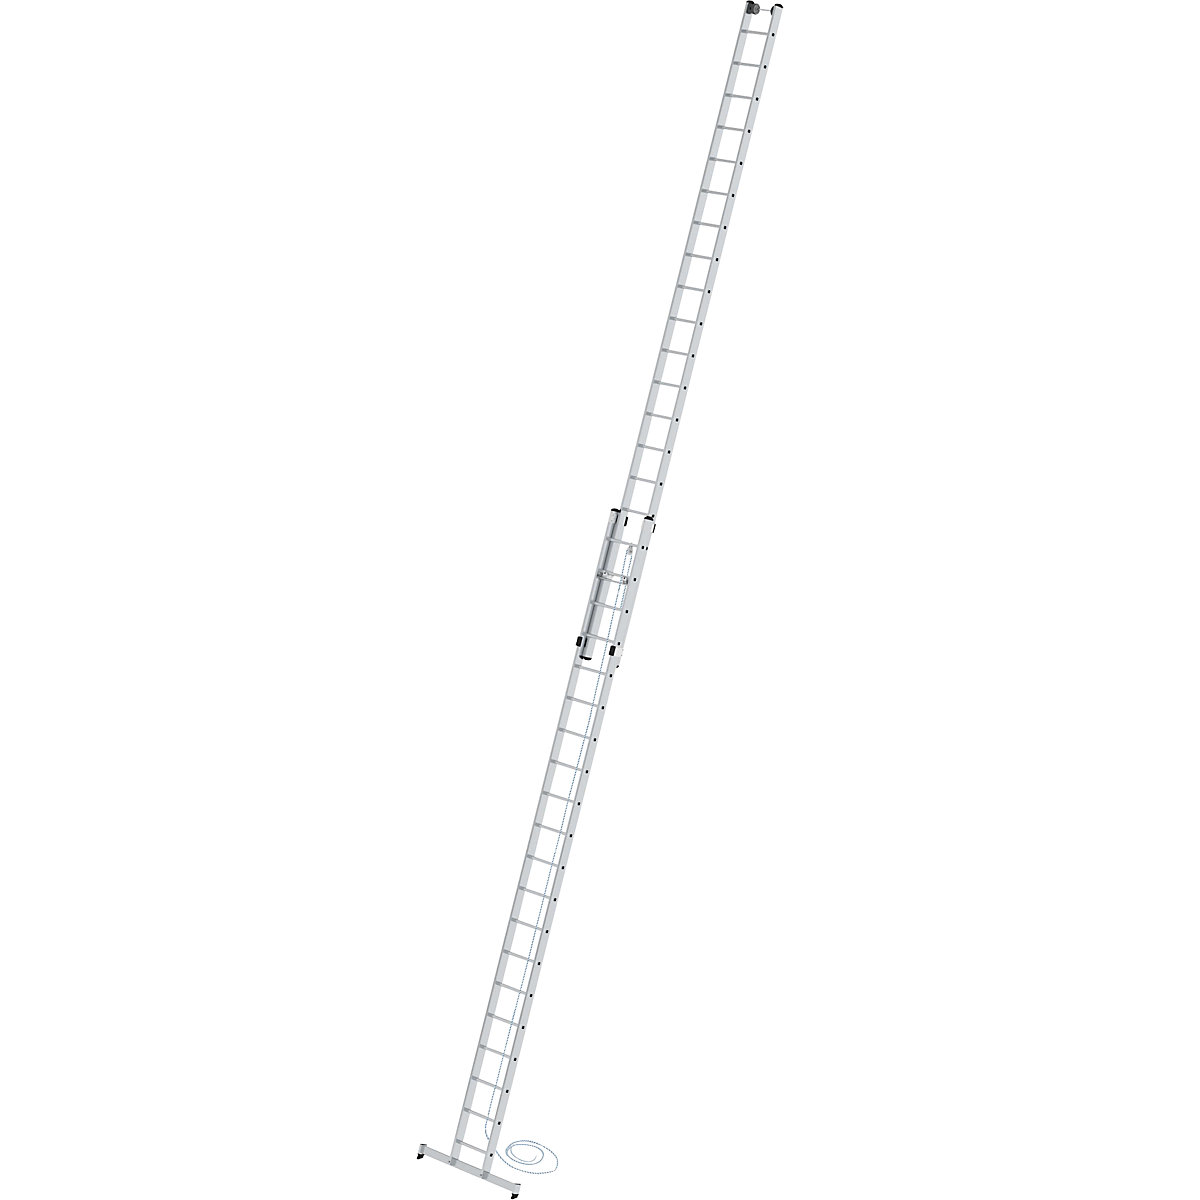 Aanlegladder, in hoogte verstelbaar – MUNK, optrekladder, 2-delig met nivello®-stabiliteitsbalk, 2 x 20 sporten-6